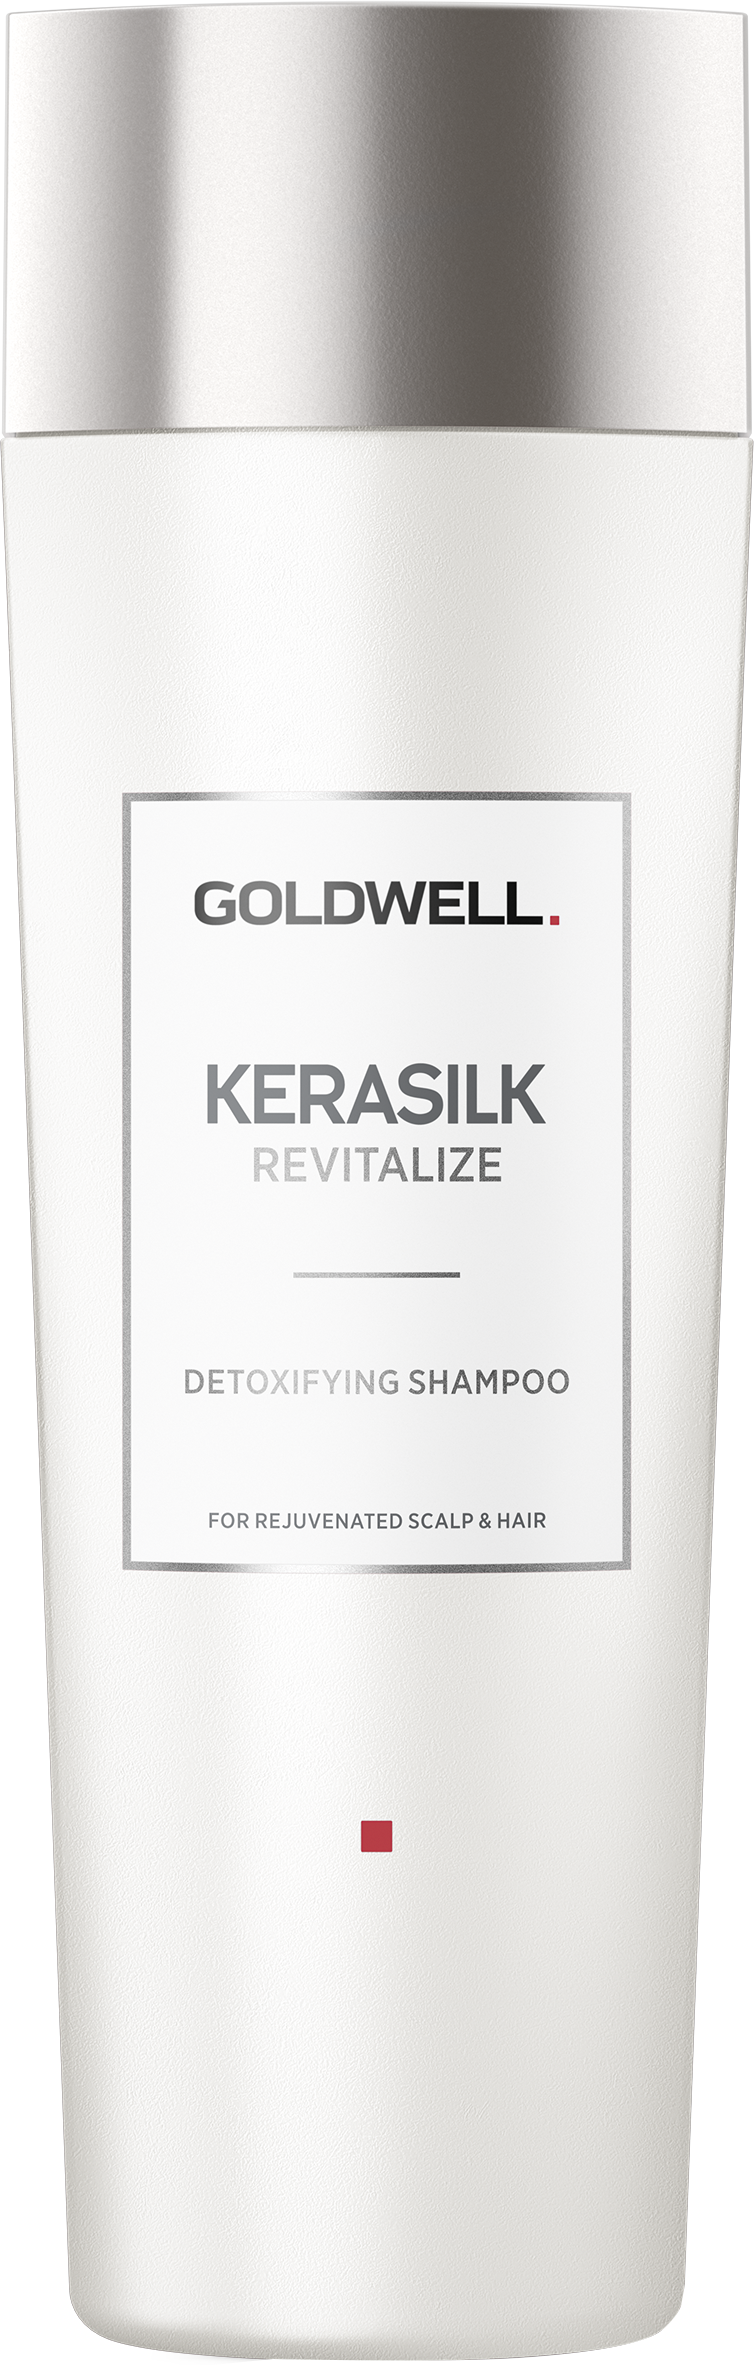 Goldwell-Kerasilk Revitalize Detoxifying Shampoo 250ml